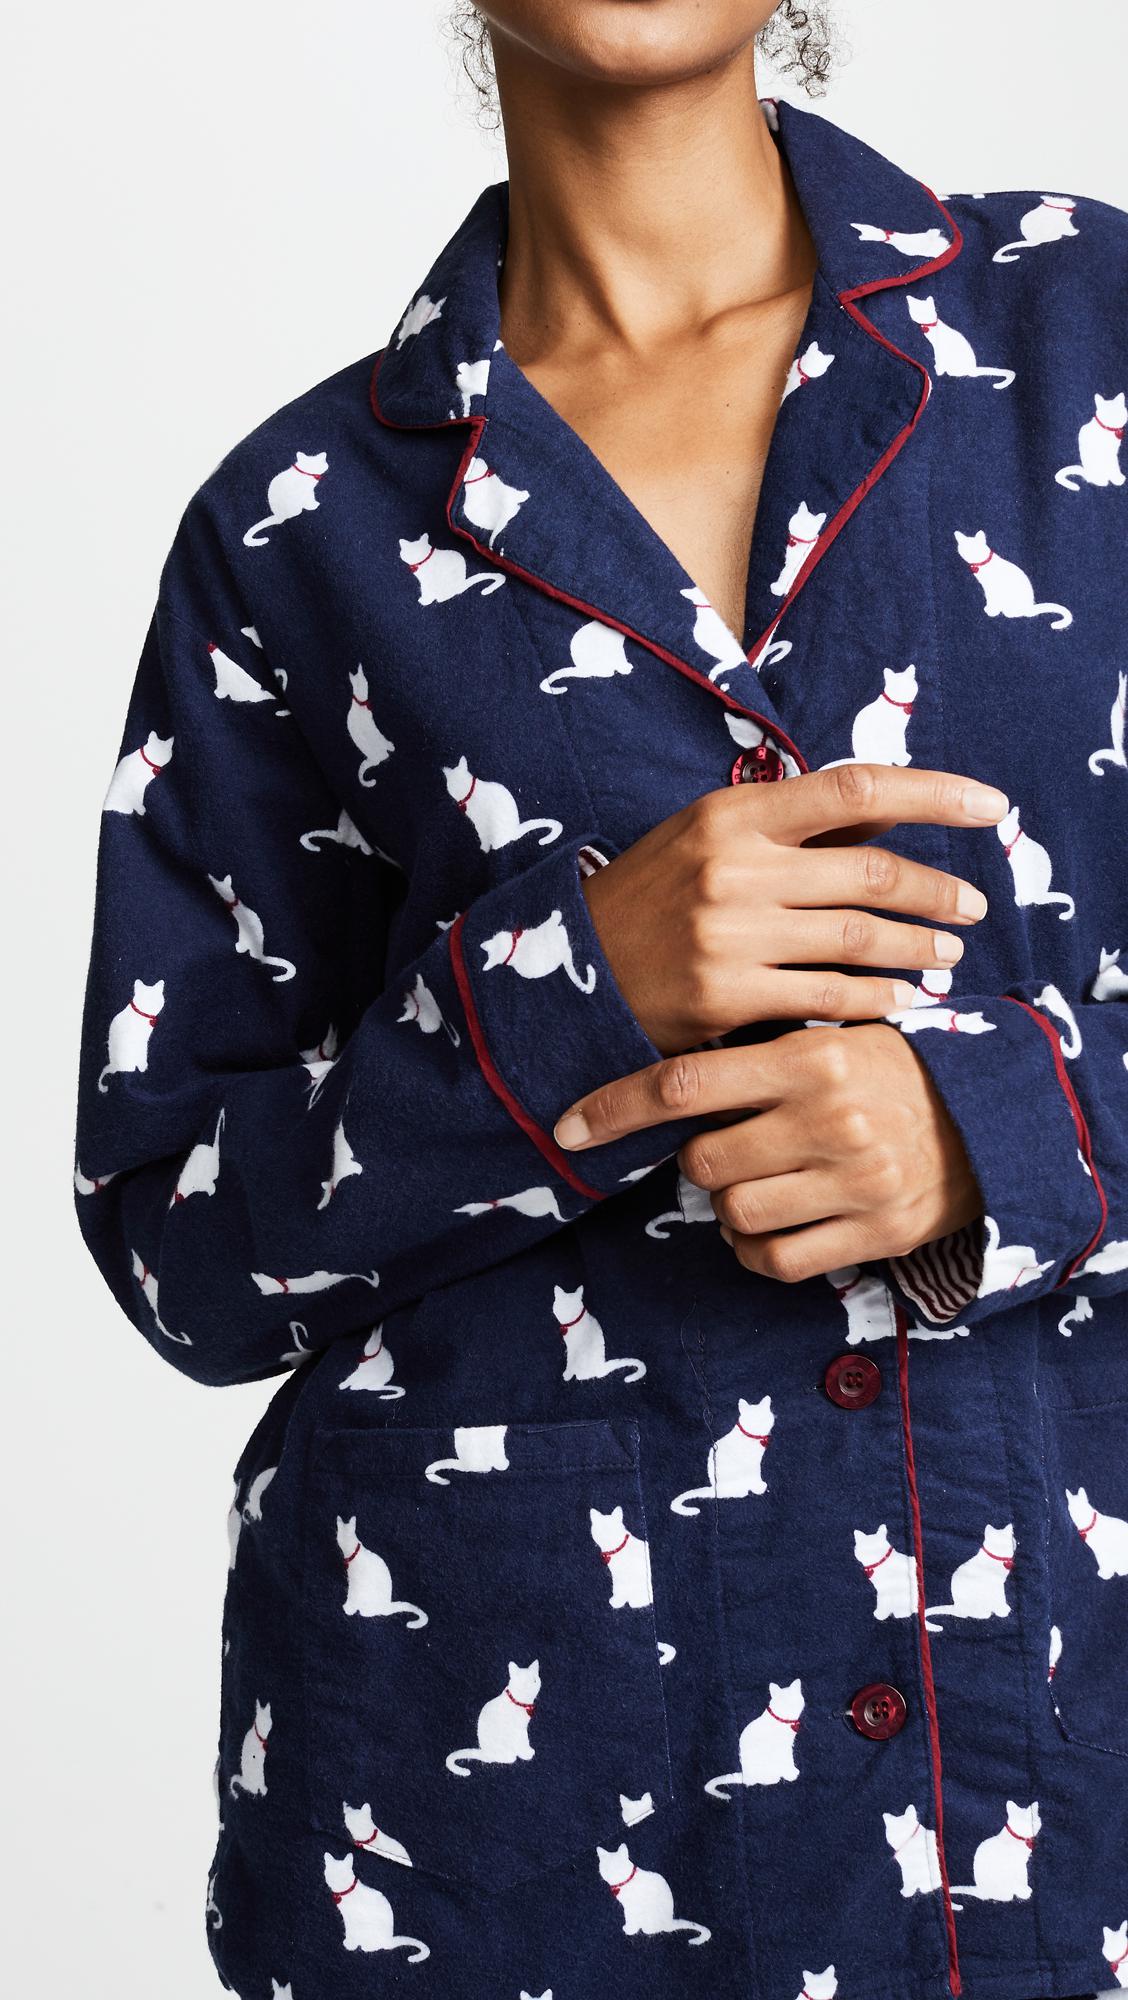 Pj Salvage Cats Pajamas Flannel Pj Set in Navy (Blue) - Lyst